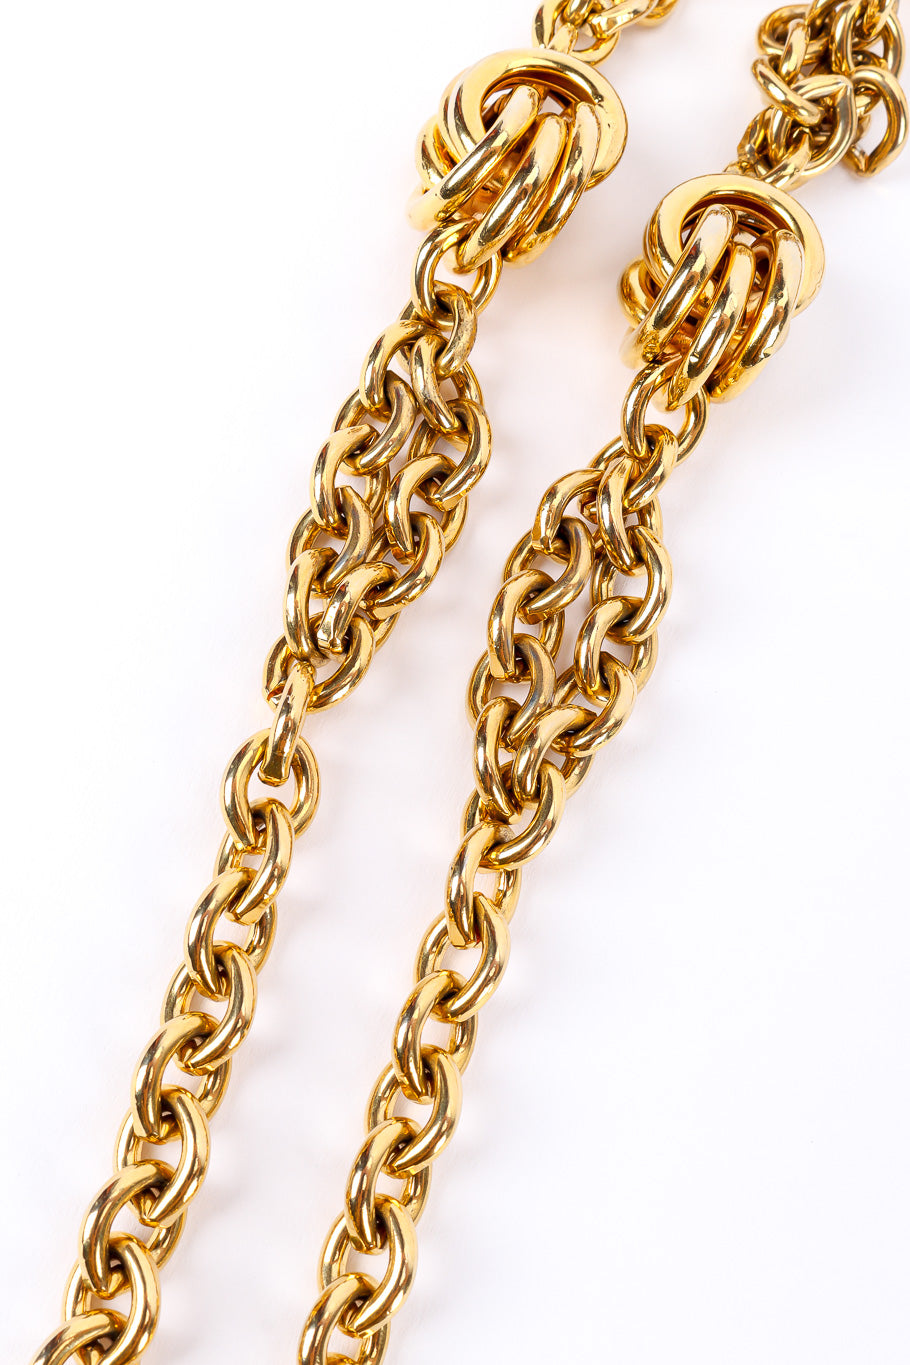 Gold metal vintage chain belt on white background two strands close  @recessla